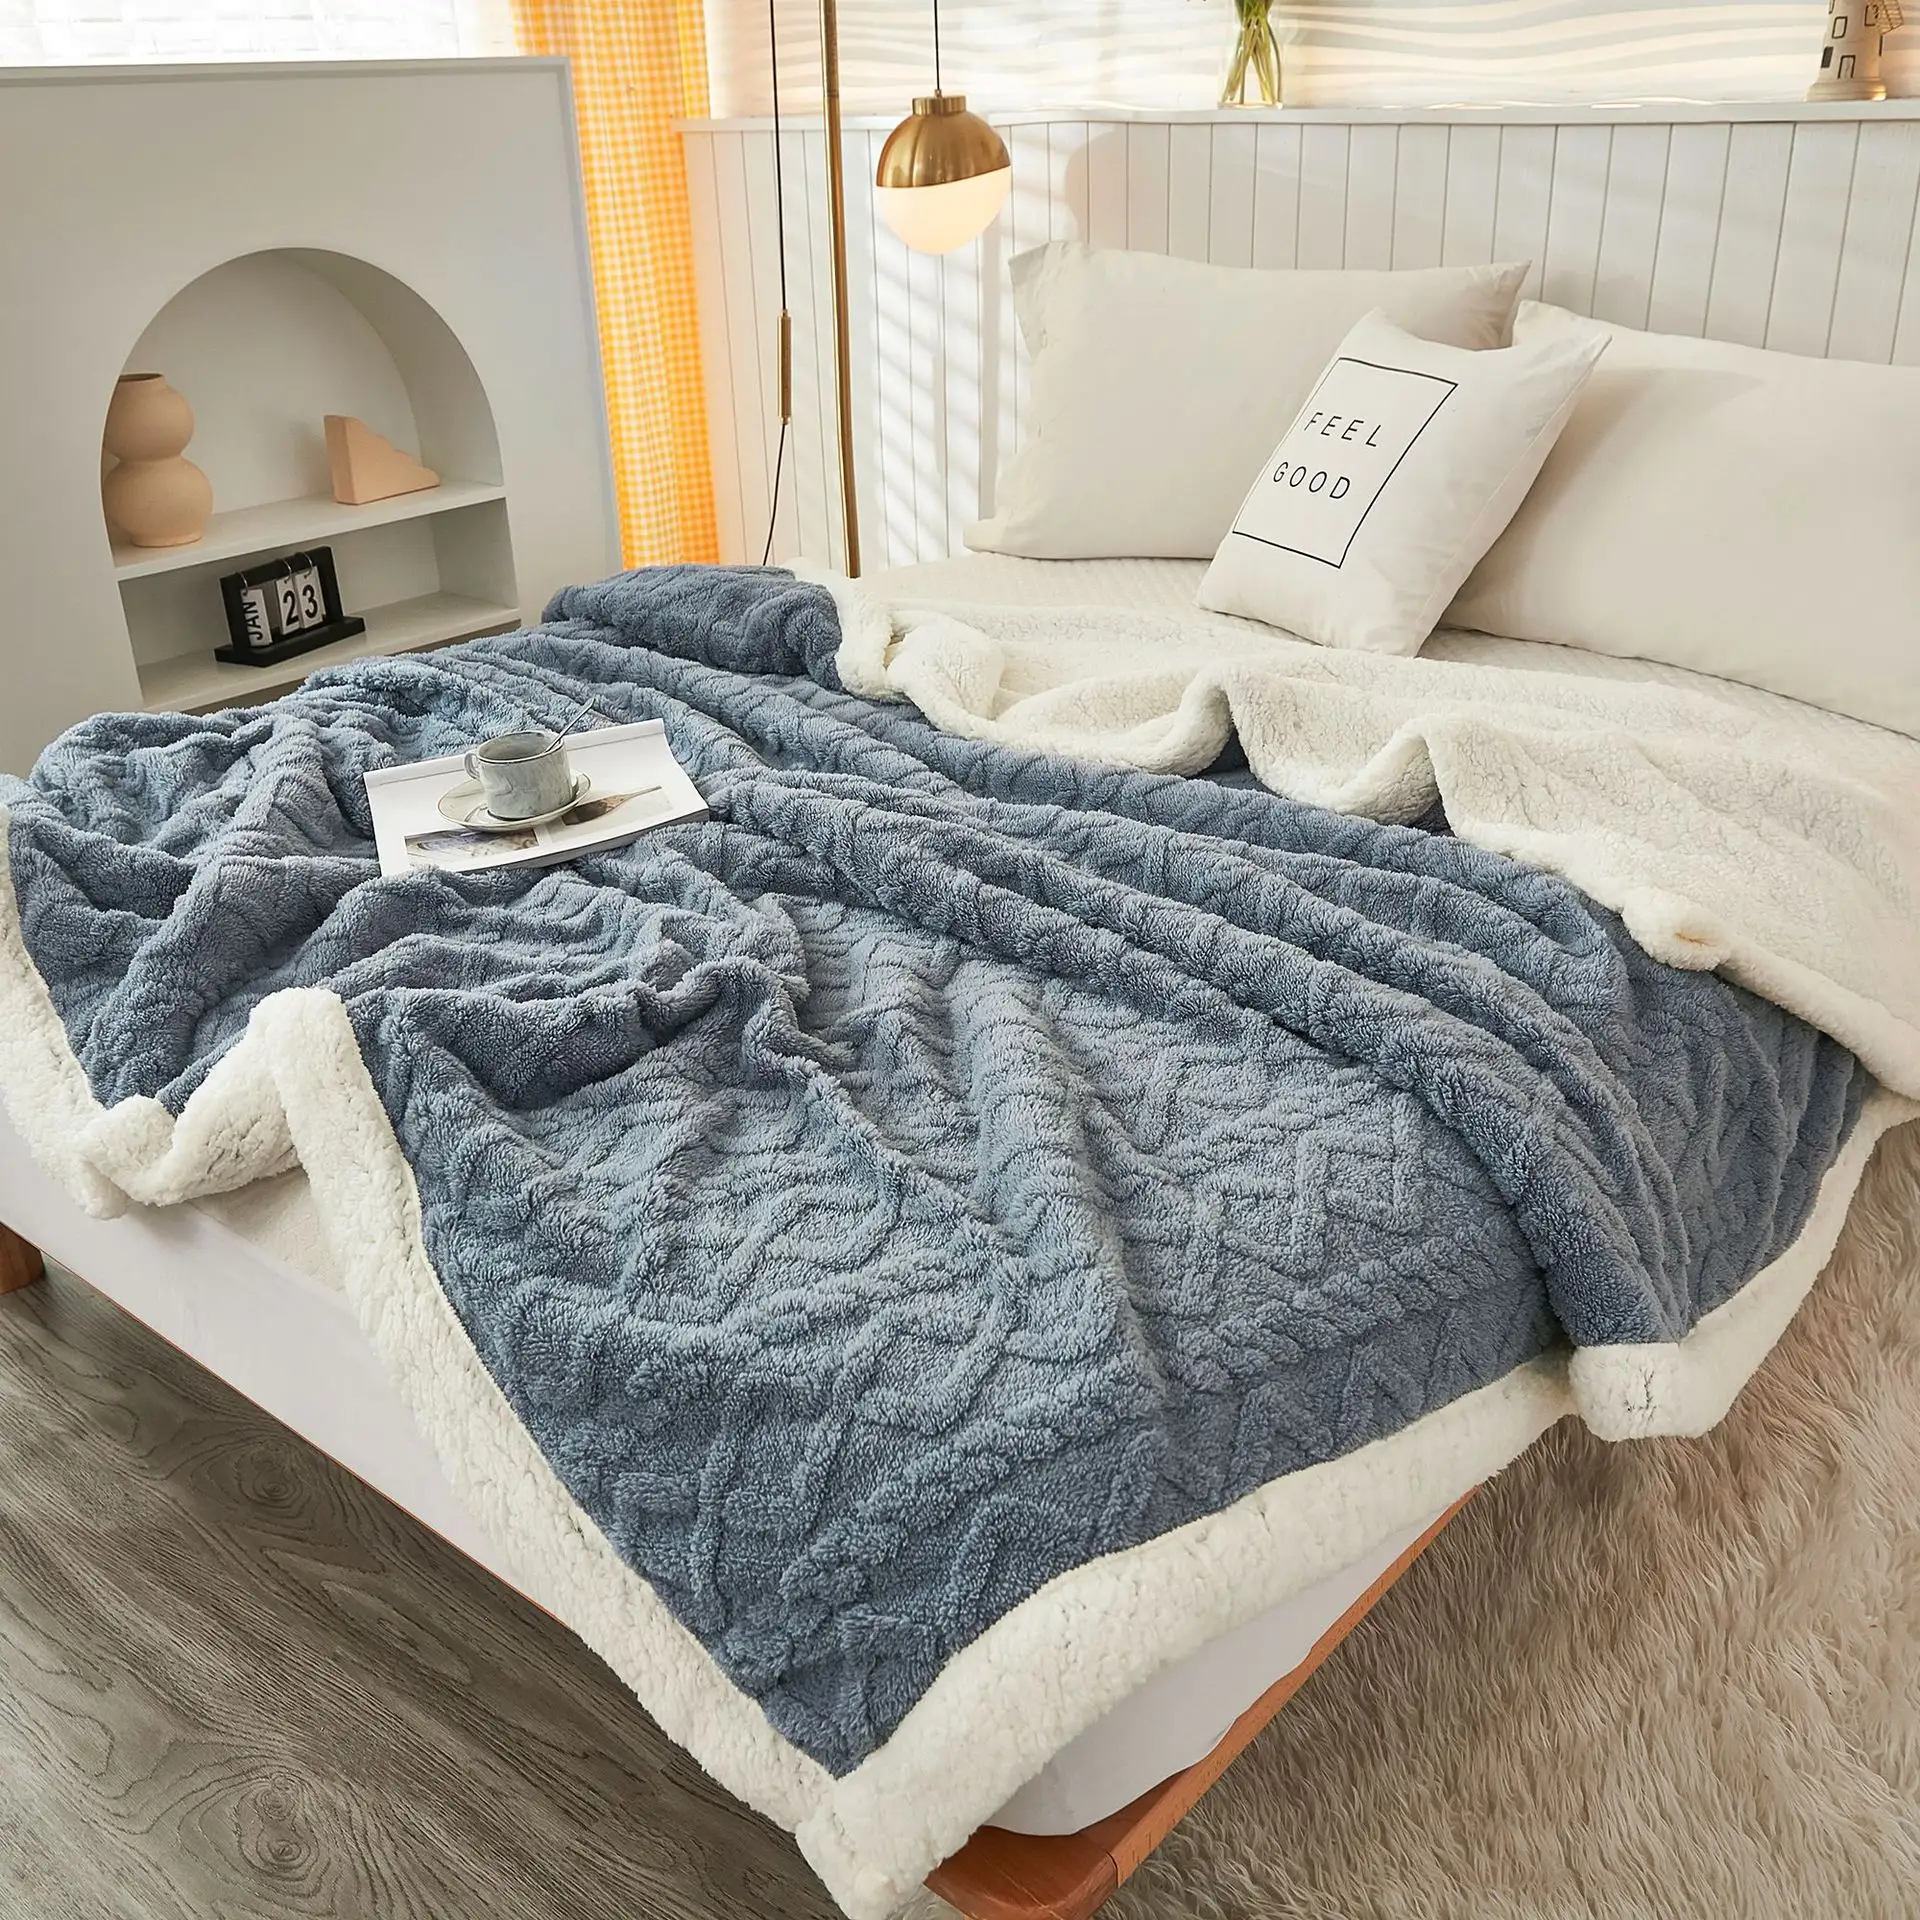 Aoyatex Sherpa Blanket Polyester Super Soft Cozy Shu Blanket Warm Flannel Soft Fleece Blanket for Sleeping